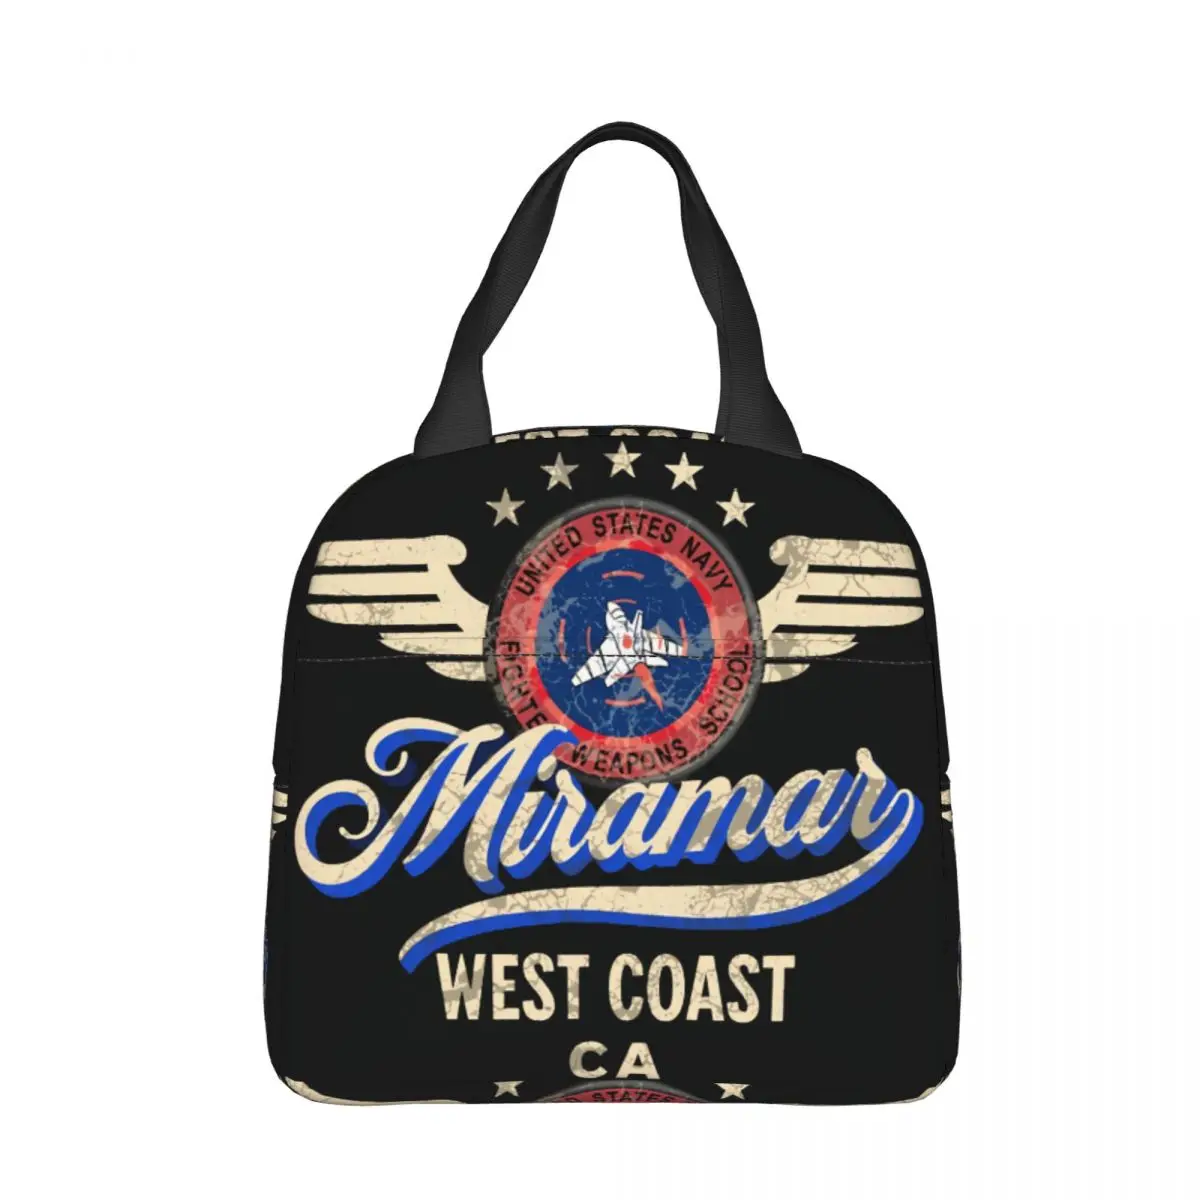 

Miramar California Oxford Cloth Portable Bags Top Gun Maverick Goose Film School Trip Lunch Hiking Debris Cooler Food Handbags